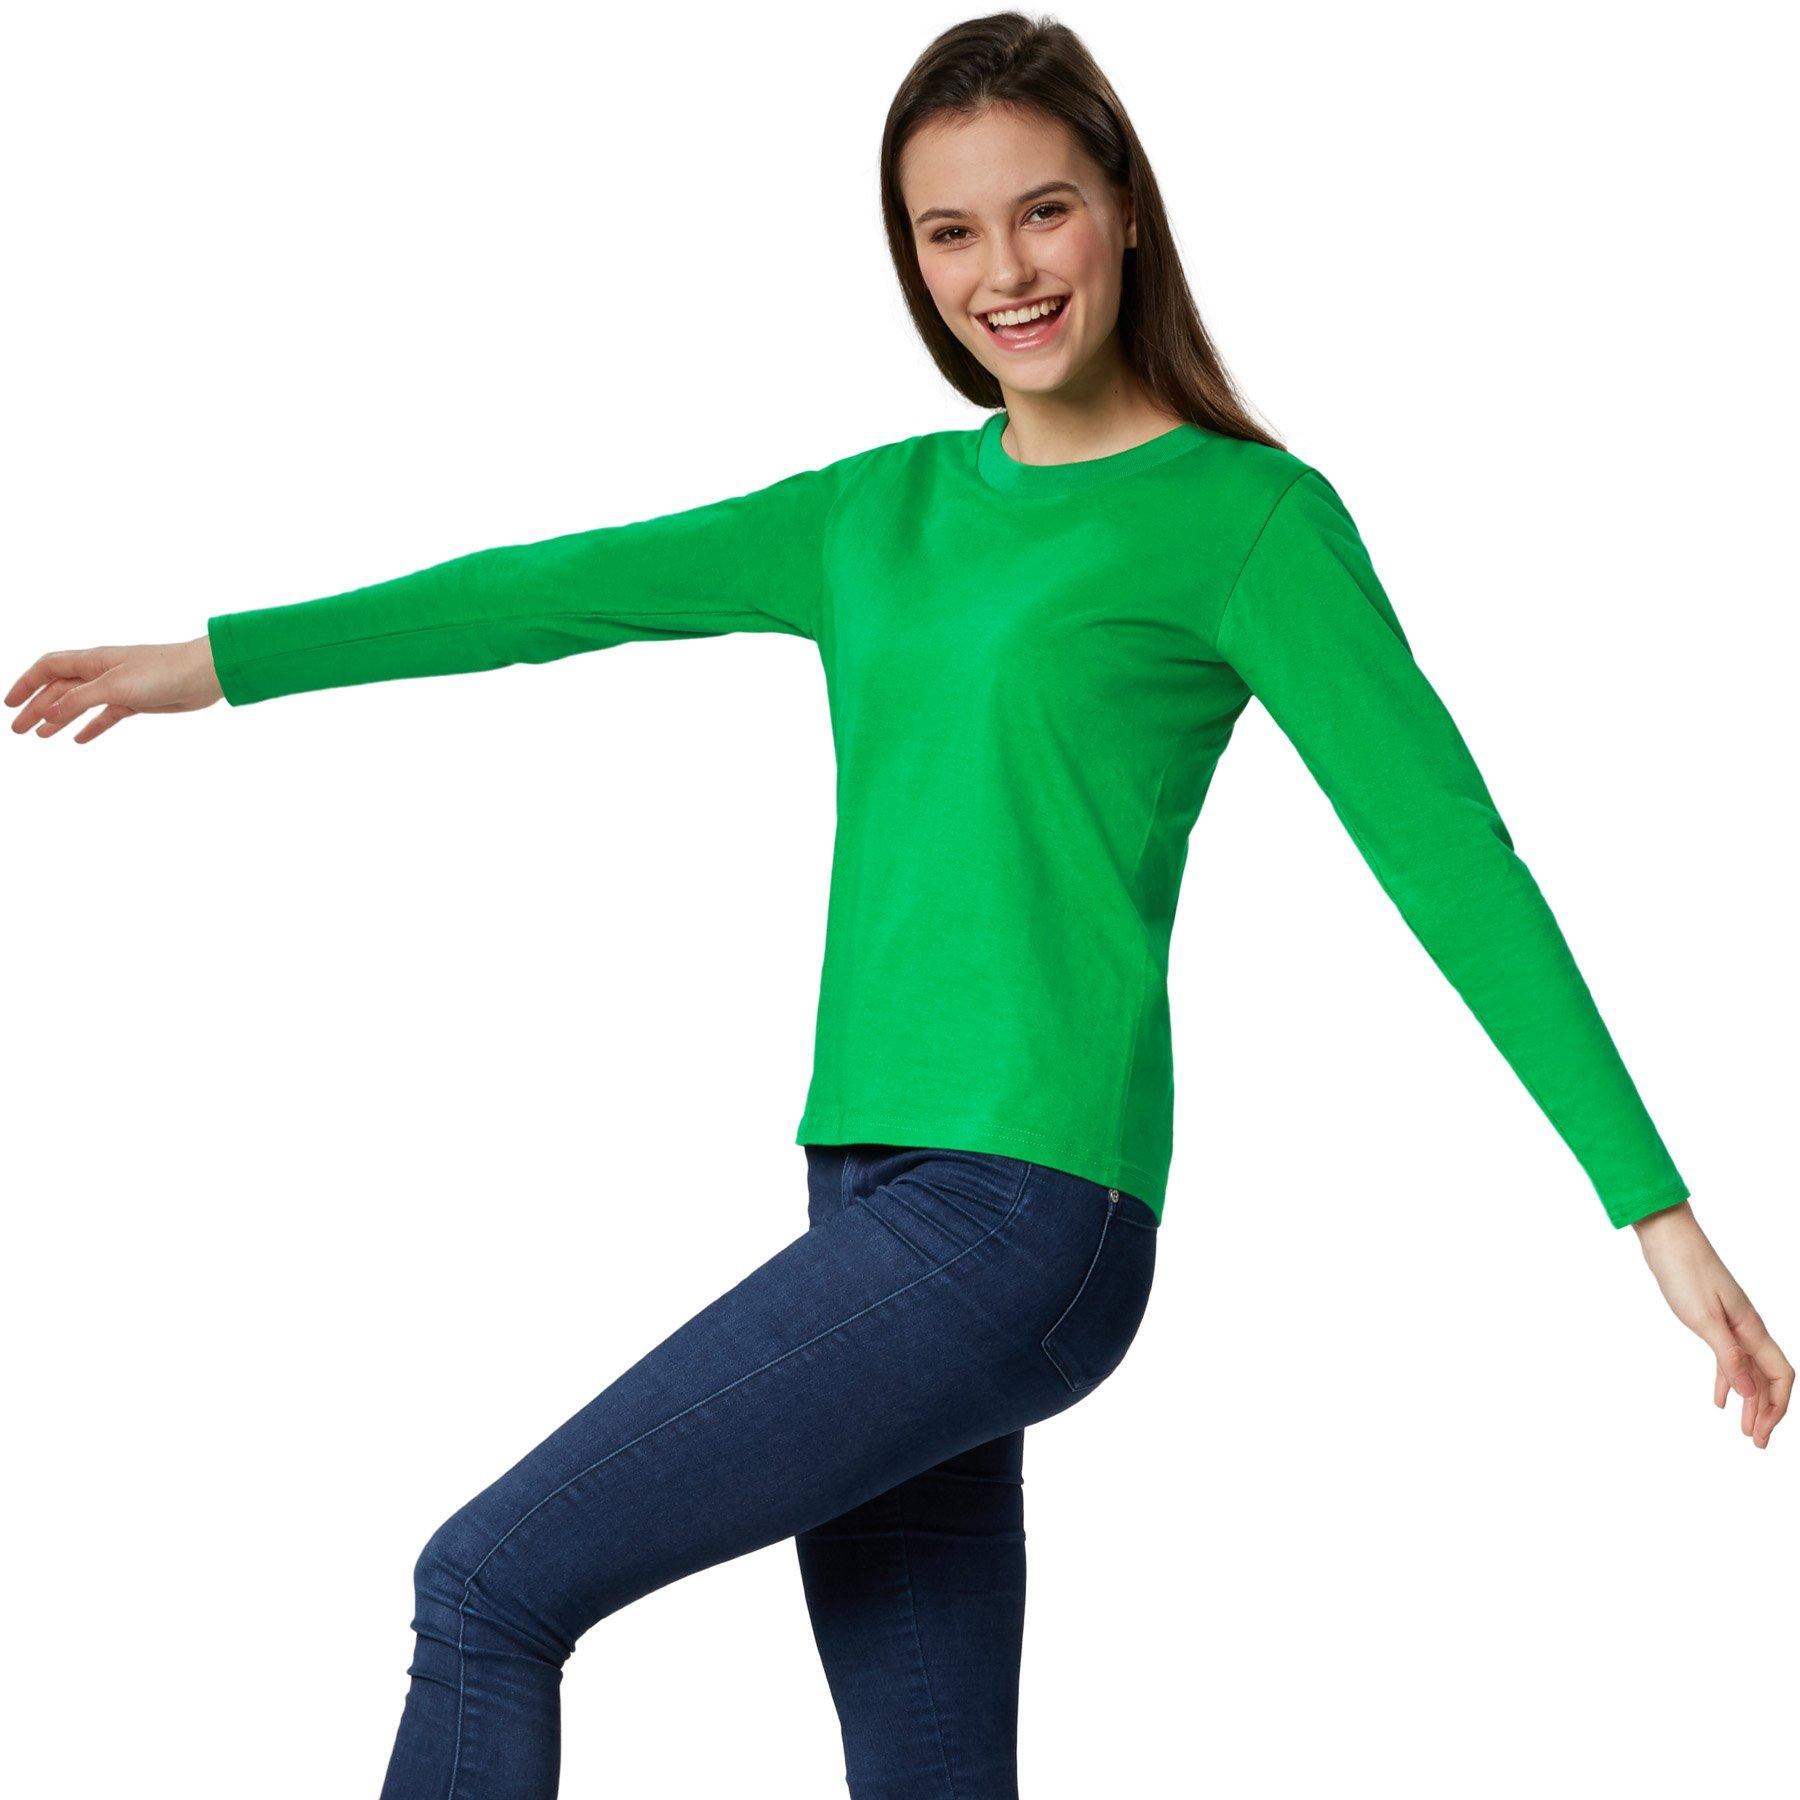 Langarm-shirt Frauen Damen Grün M von Tectake